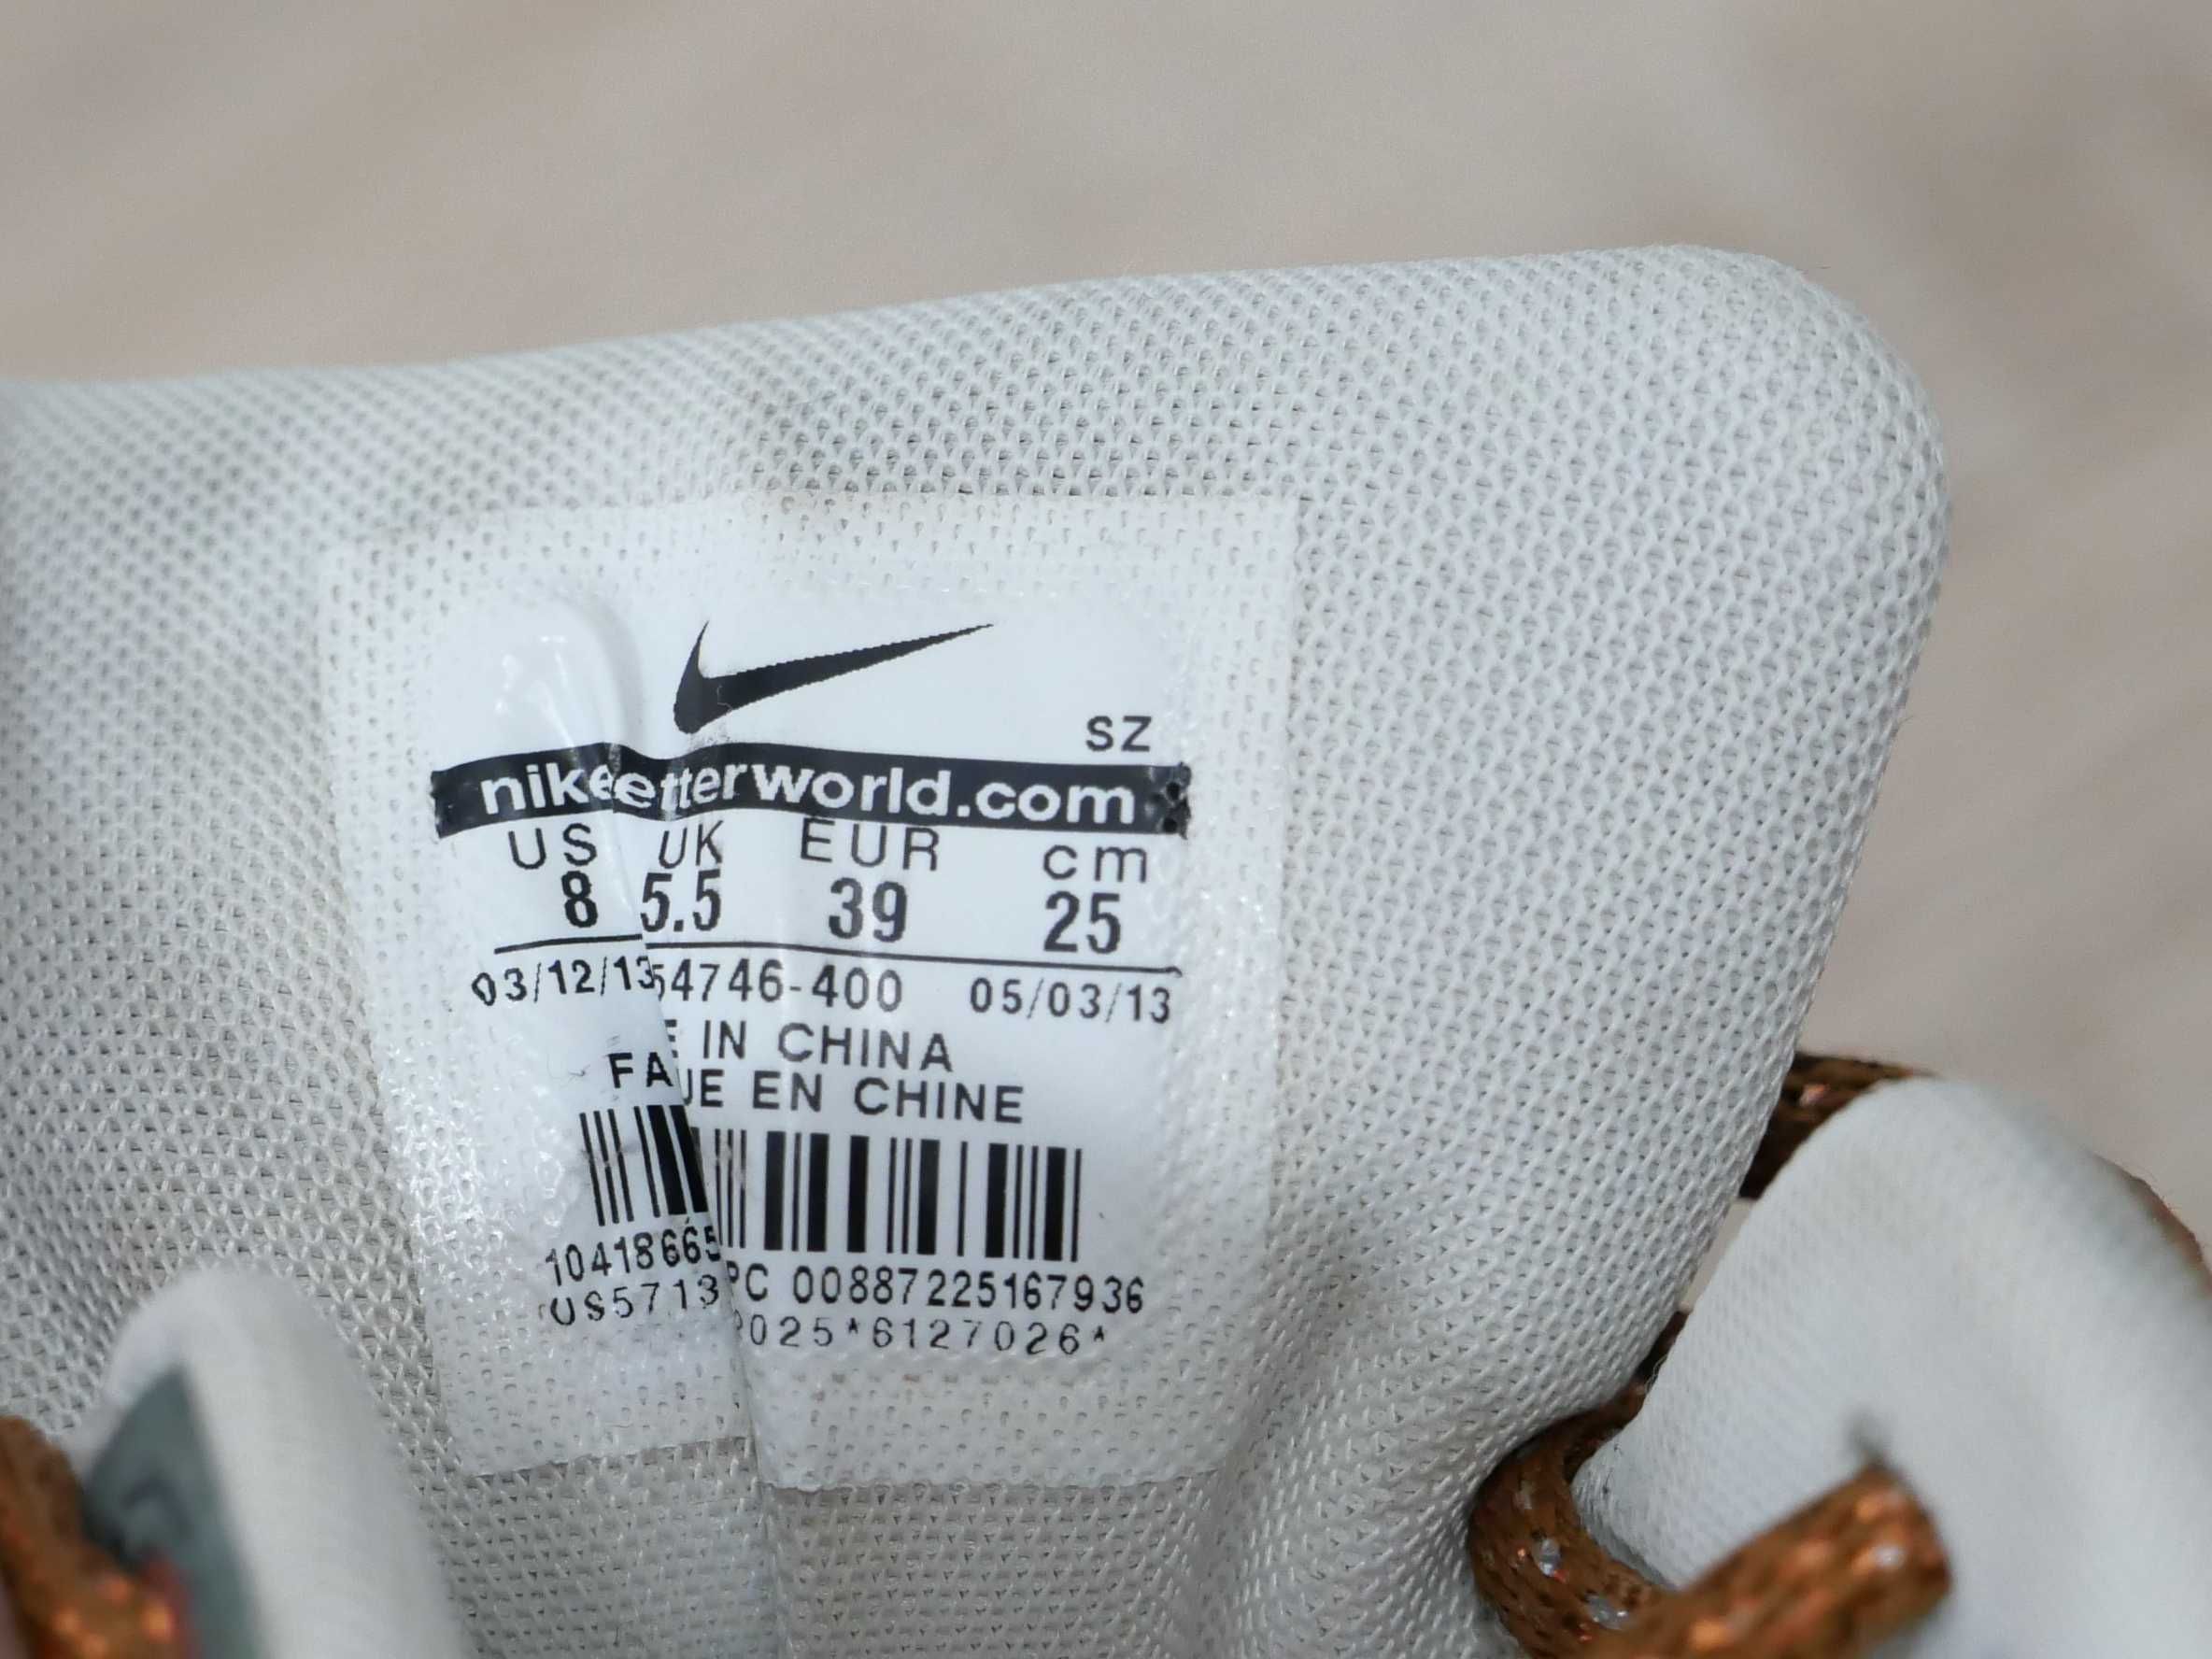 Nike Air Max 1 Premium buty sportowe skórzane granatowe 39